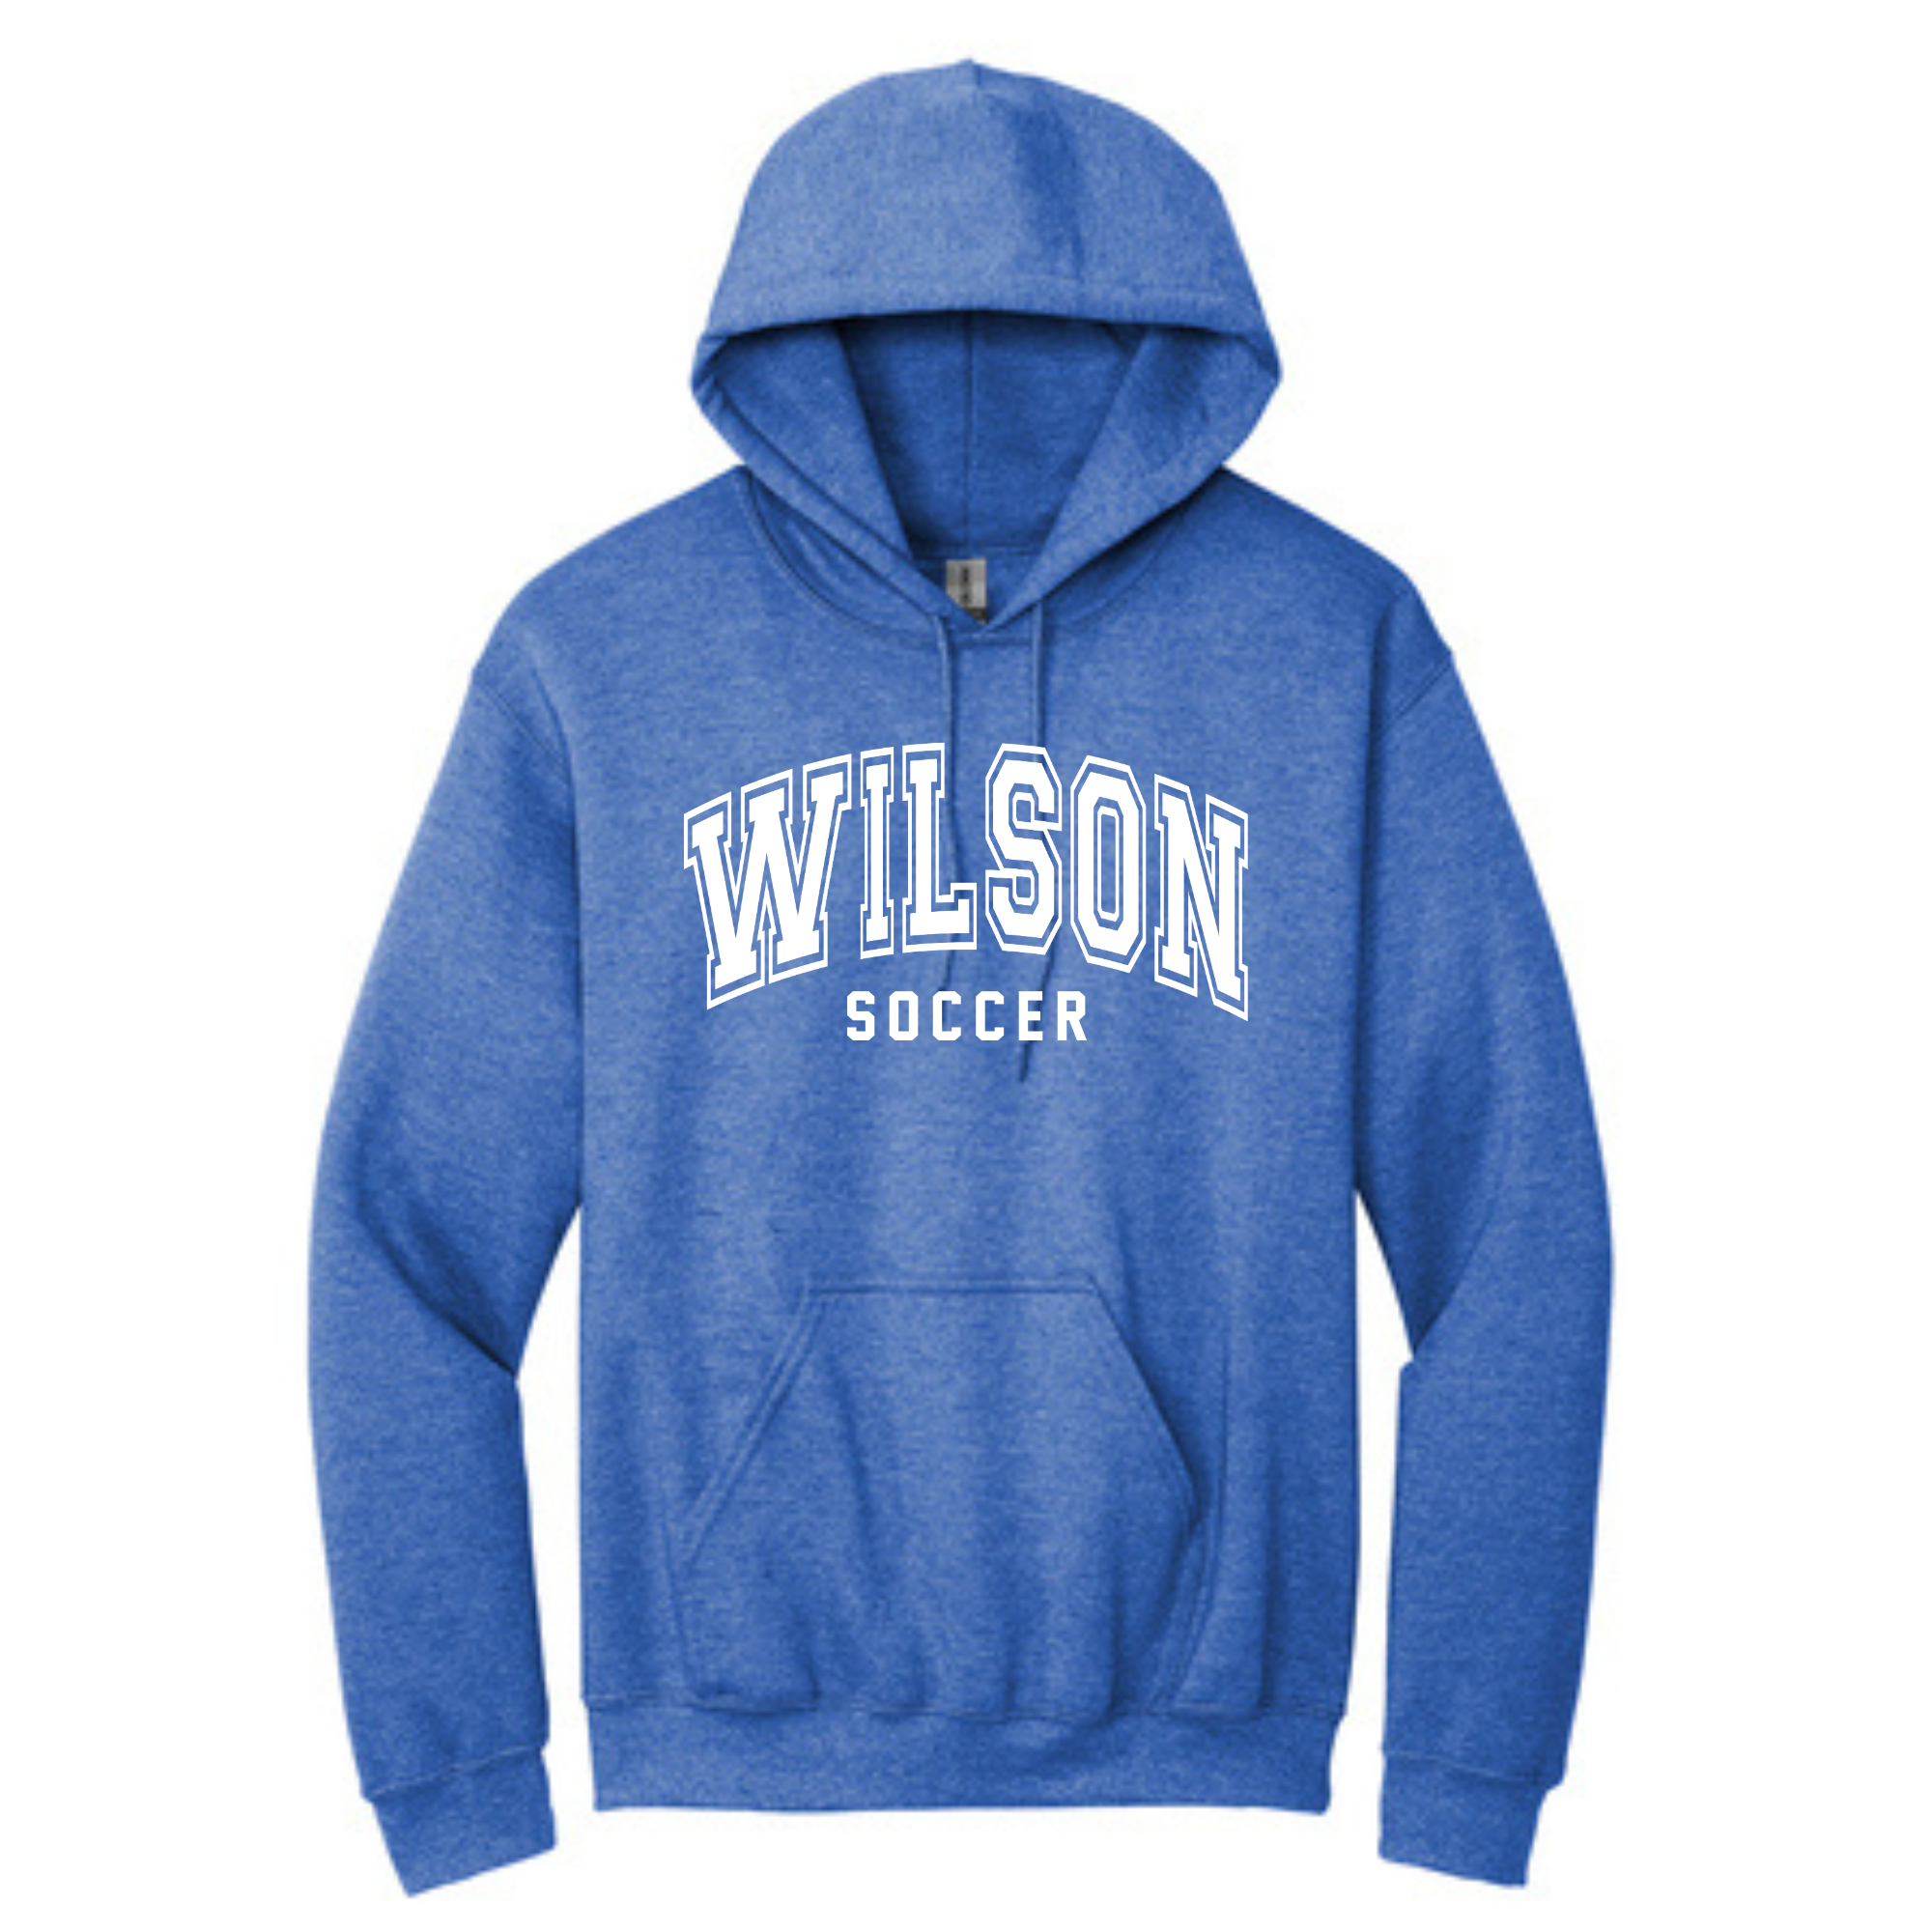 Wilson soccer arched collegiate HOODIE- 18500